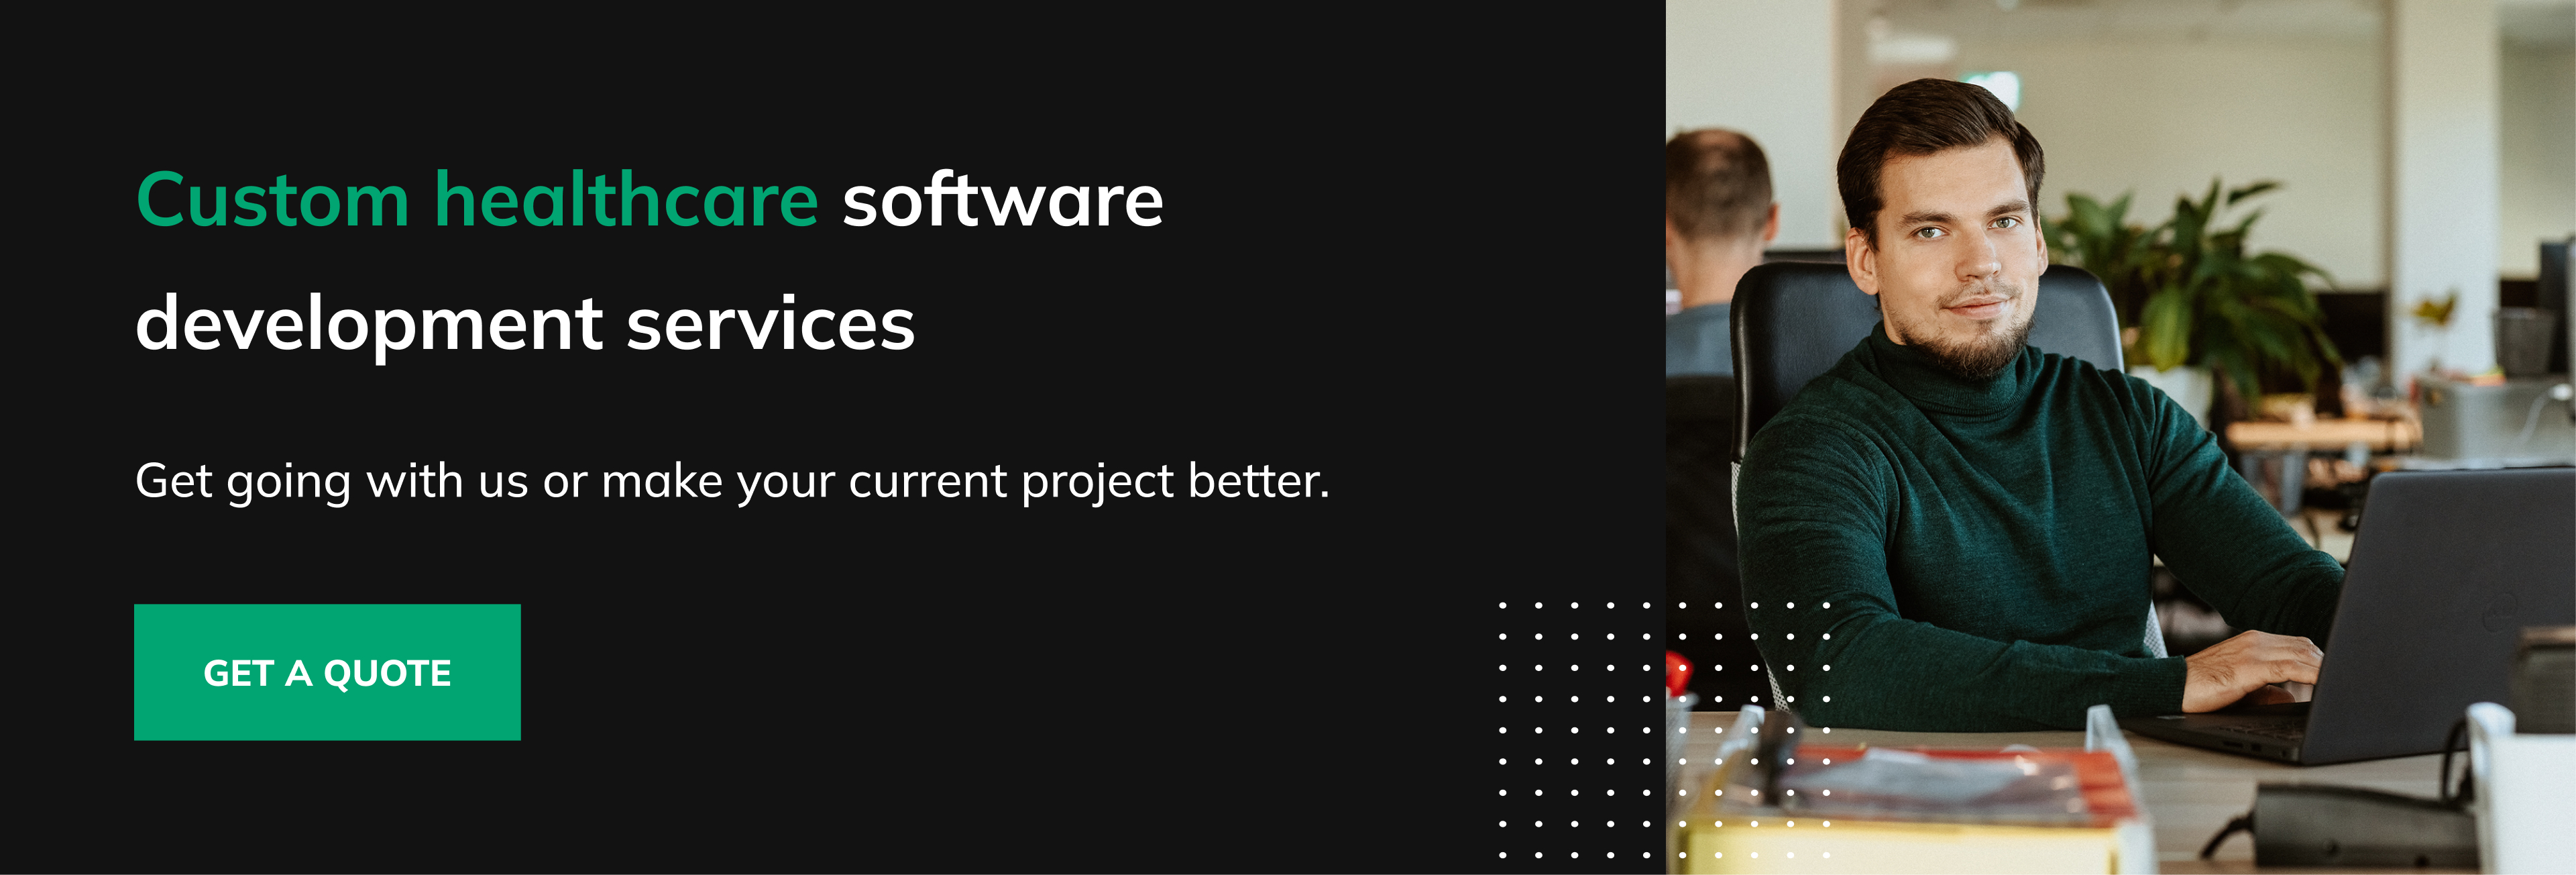 Custom healthcare software development services